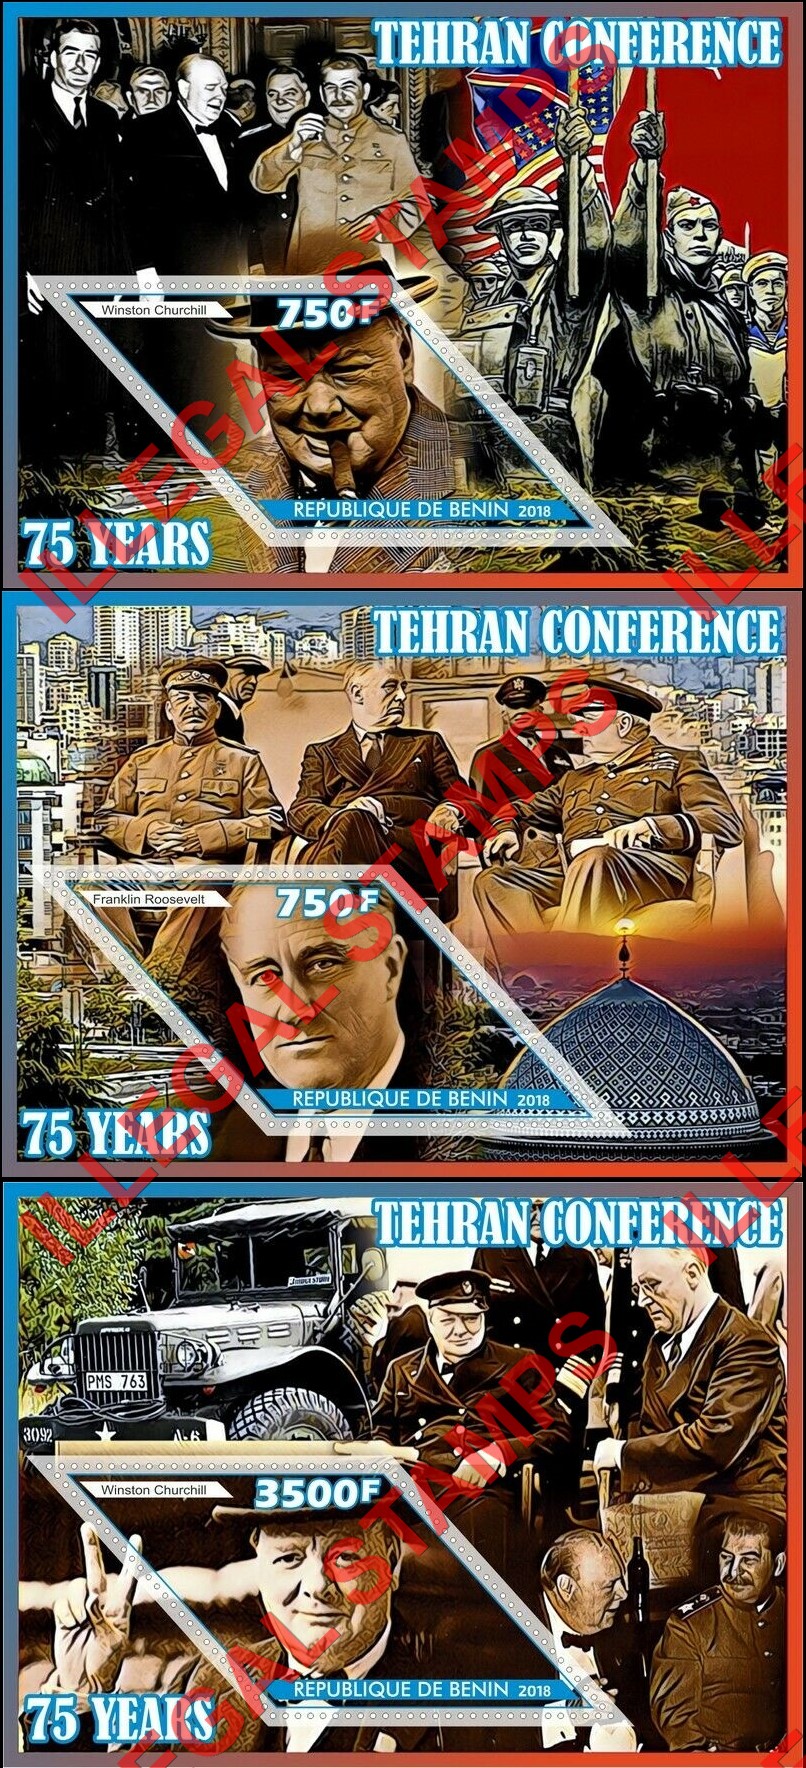 Benin 2018 Tehran Conference Illegal Stamp Souvenir Sheets of 1 (Part 2)